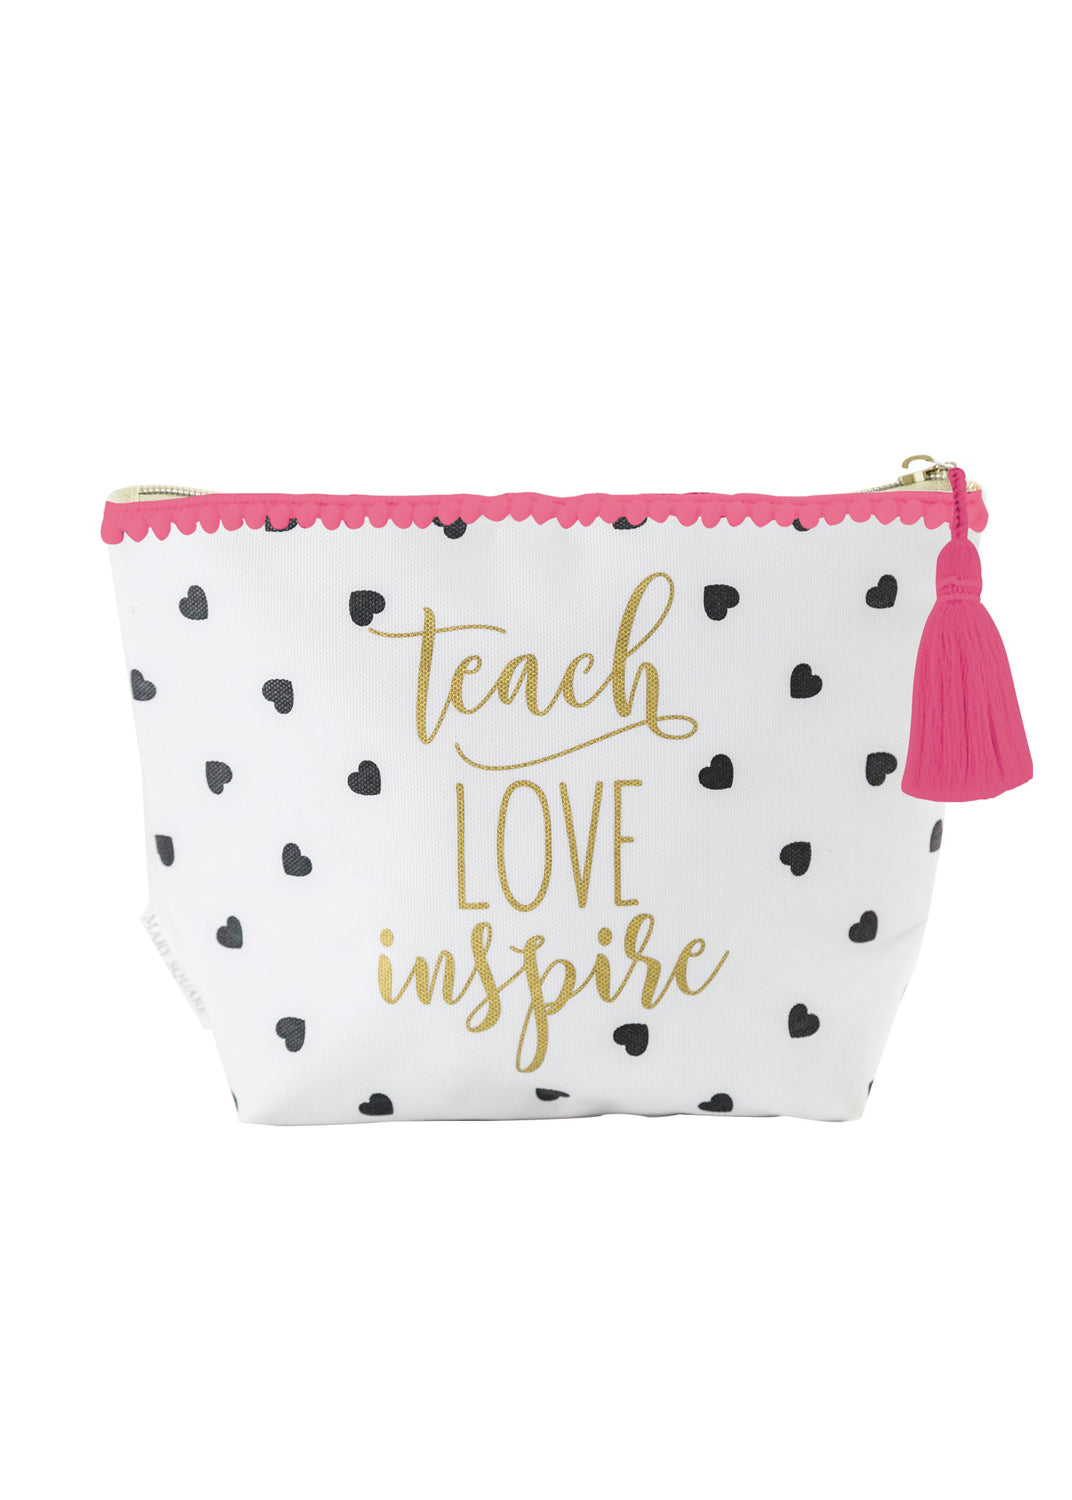 Teach, Love, Inspire Carryall Bag Accessories